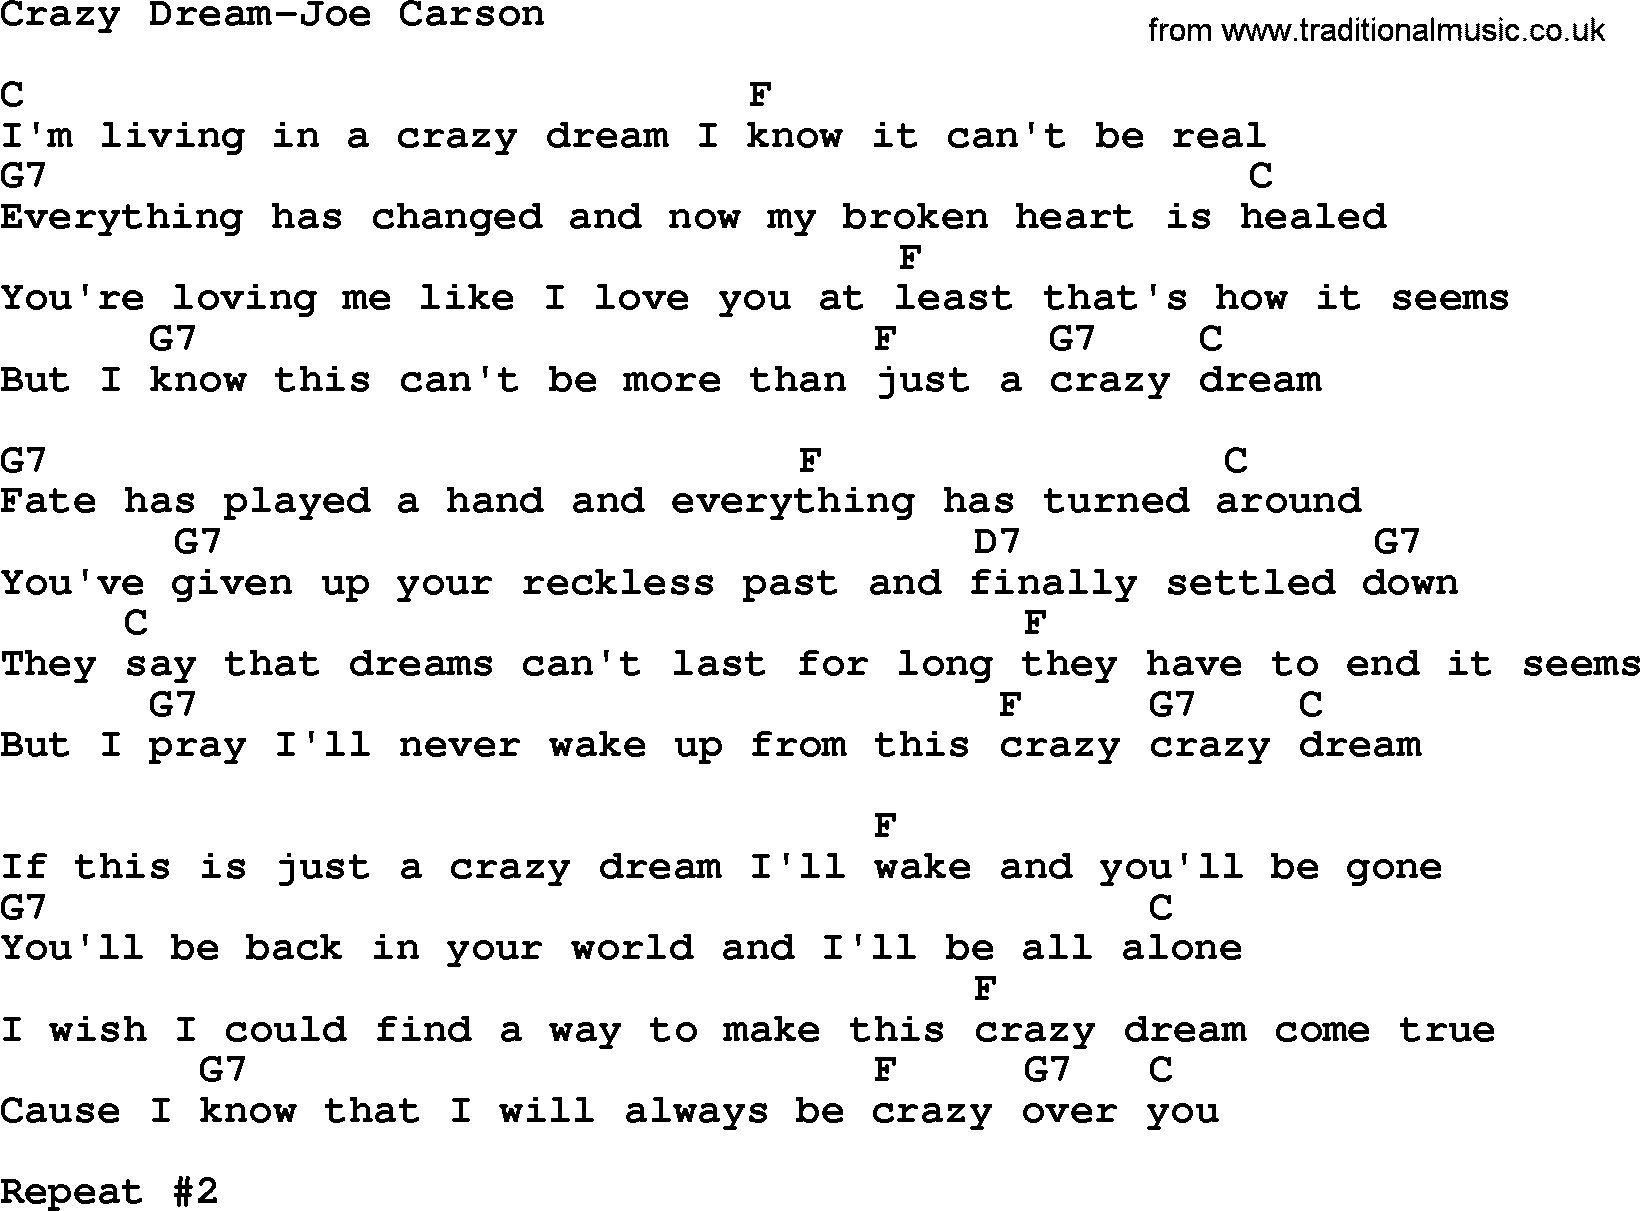 Country music song: Crazy Dream-Joe Carson lyrics and chords